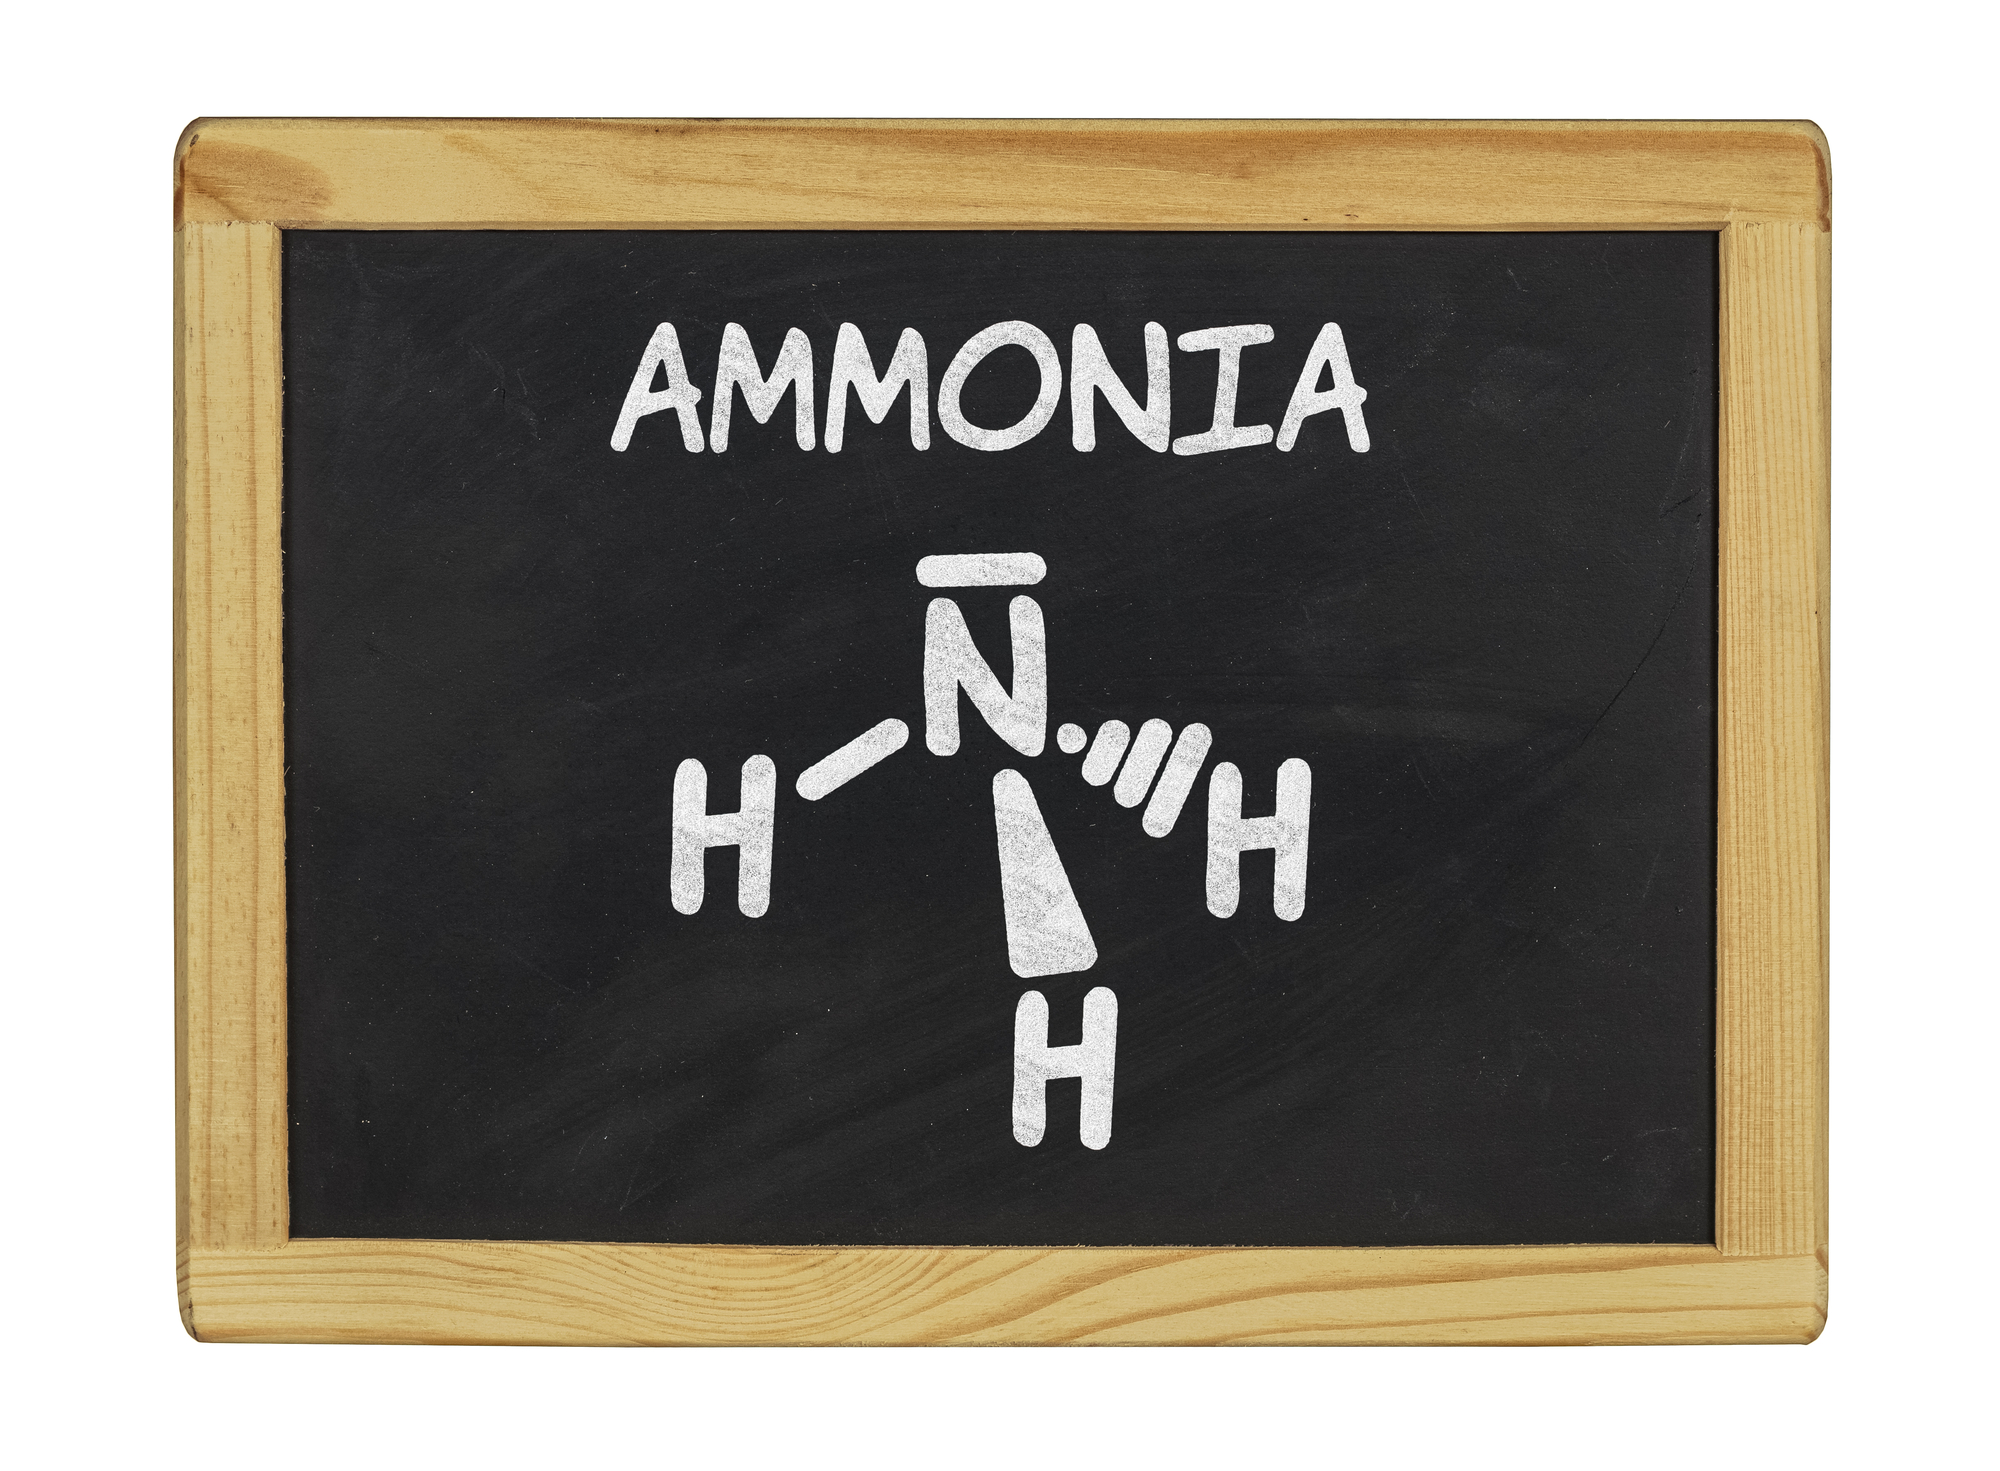 Ammonia chemical formula written on a blackboard